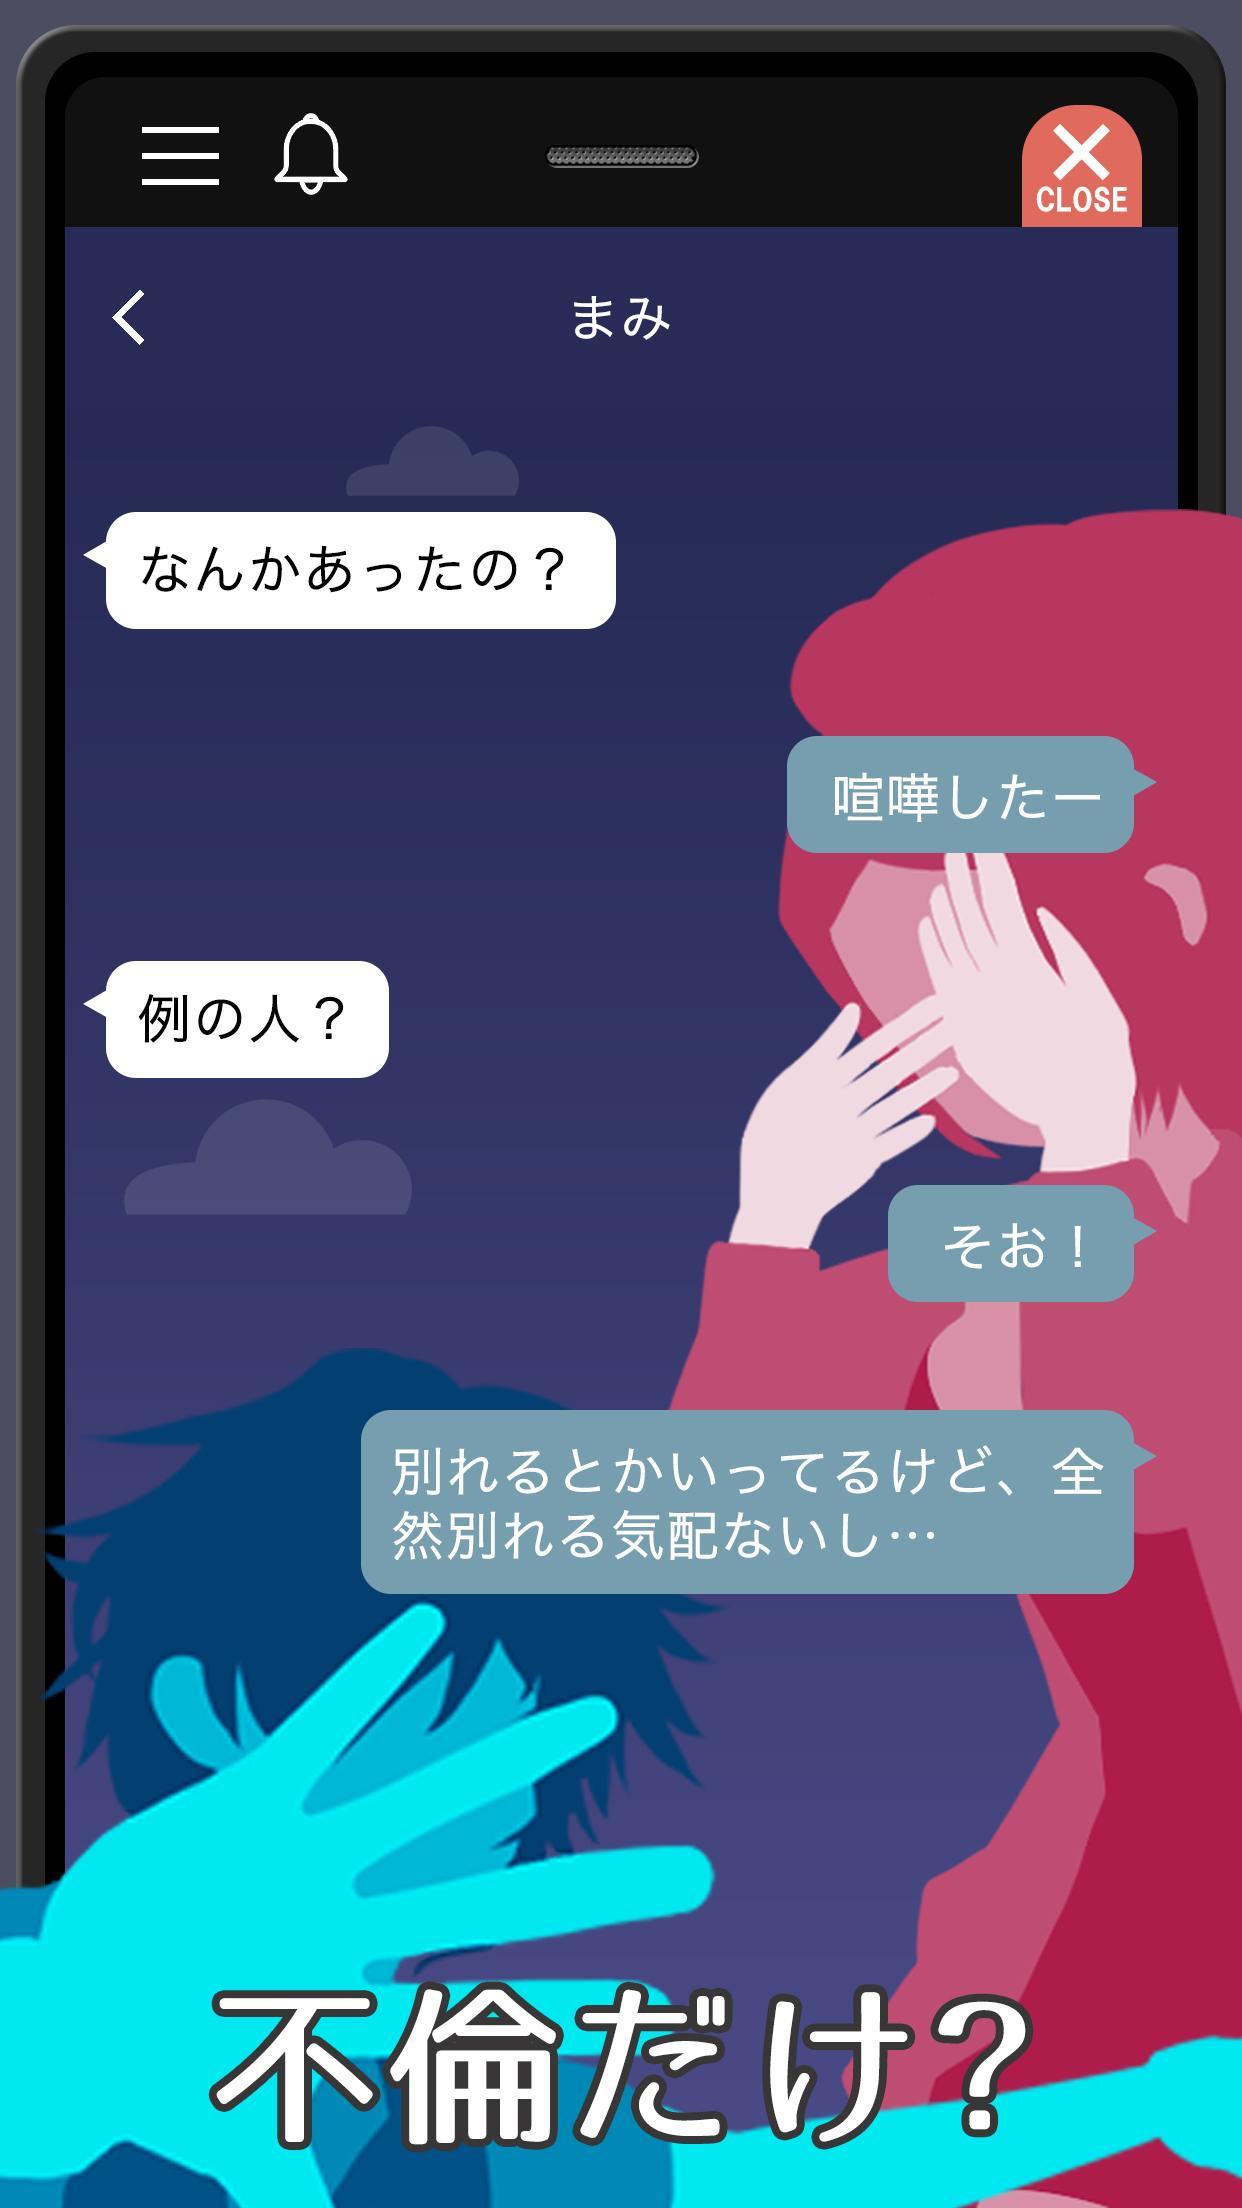 Screenshot 1 of សារី កាតូ សង្ស័យផិតក្បត់! ? ល្បែងដោះស្រាយអាថ៌កំបាំង / រត់គេច (ផ្លូវការ) 1.1